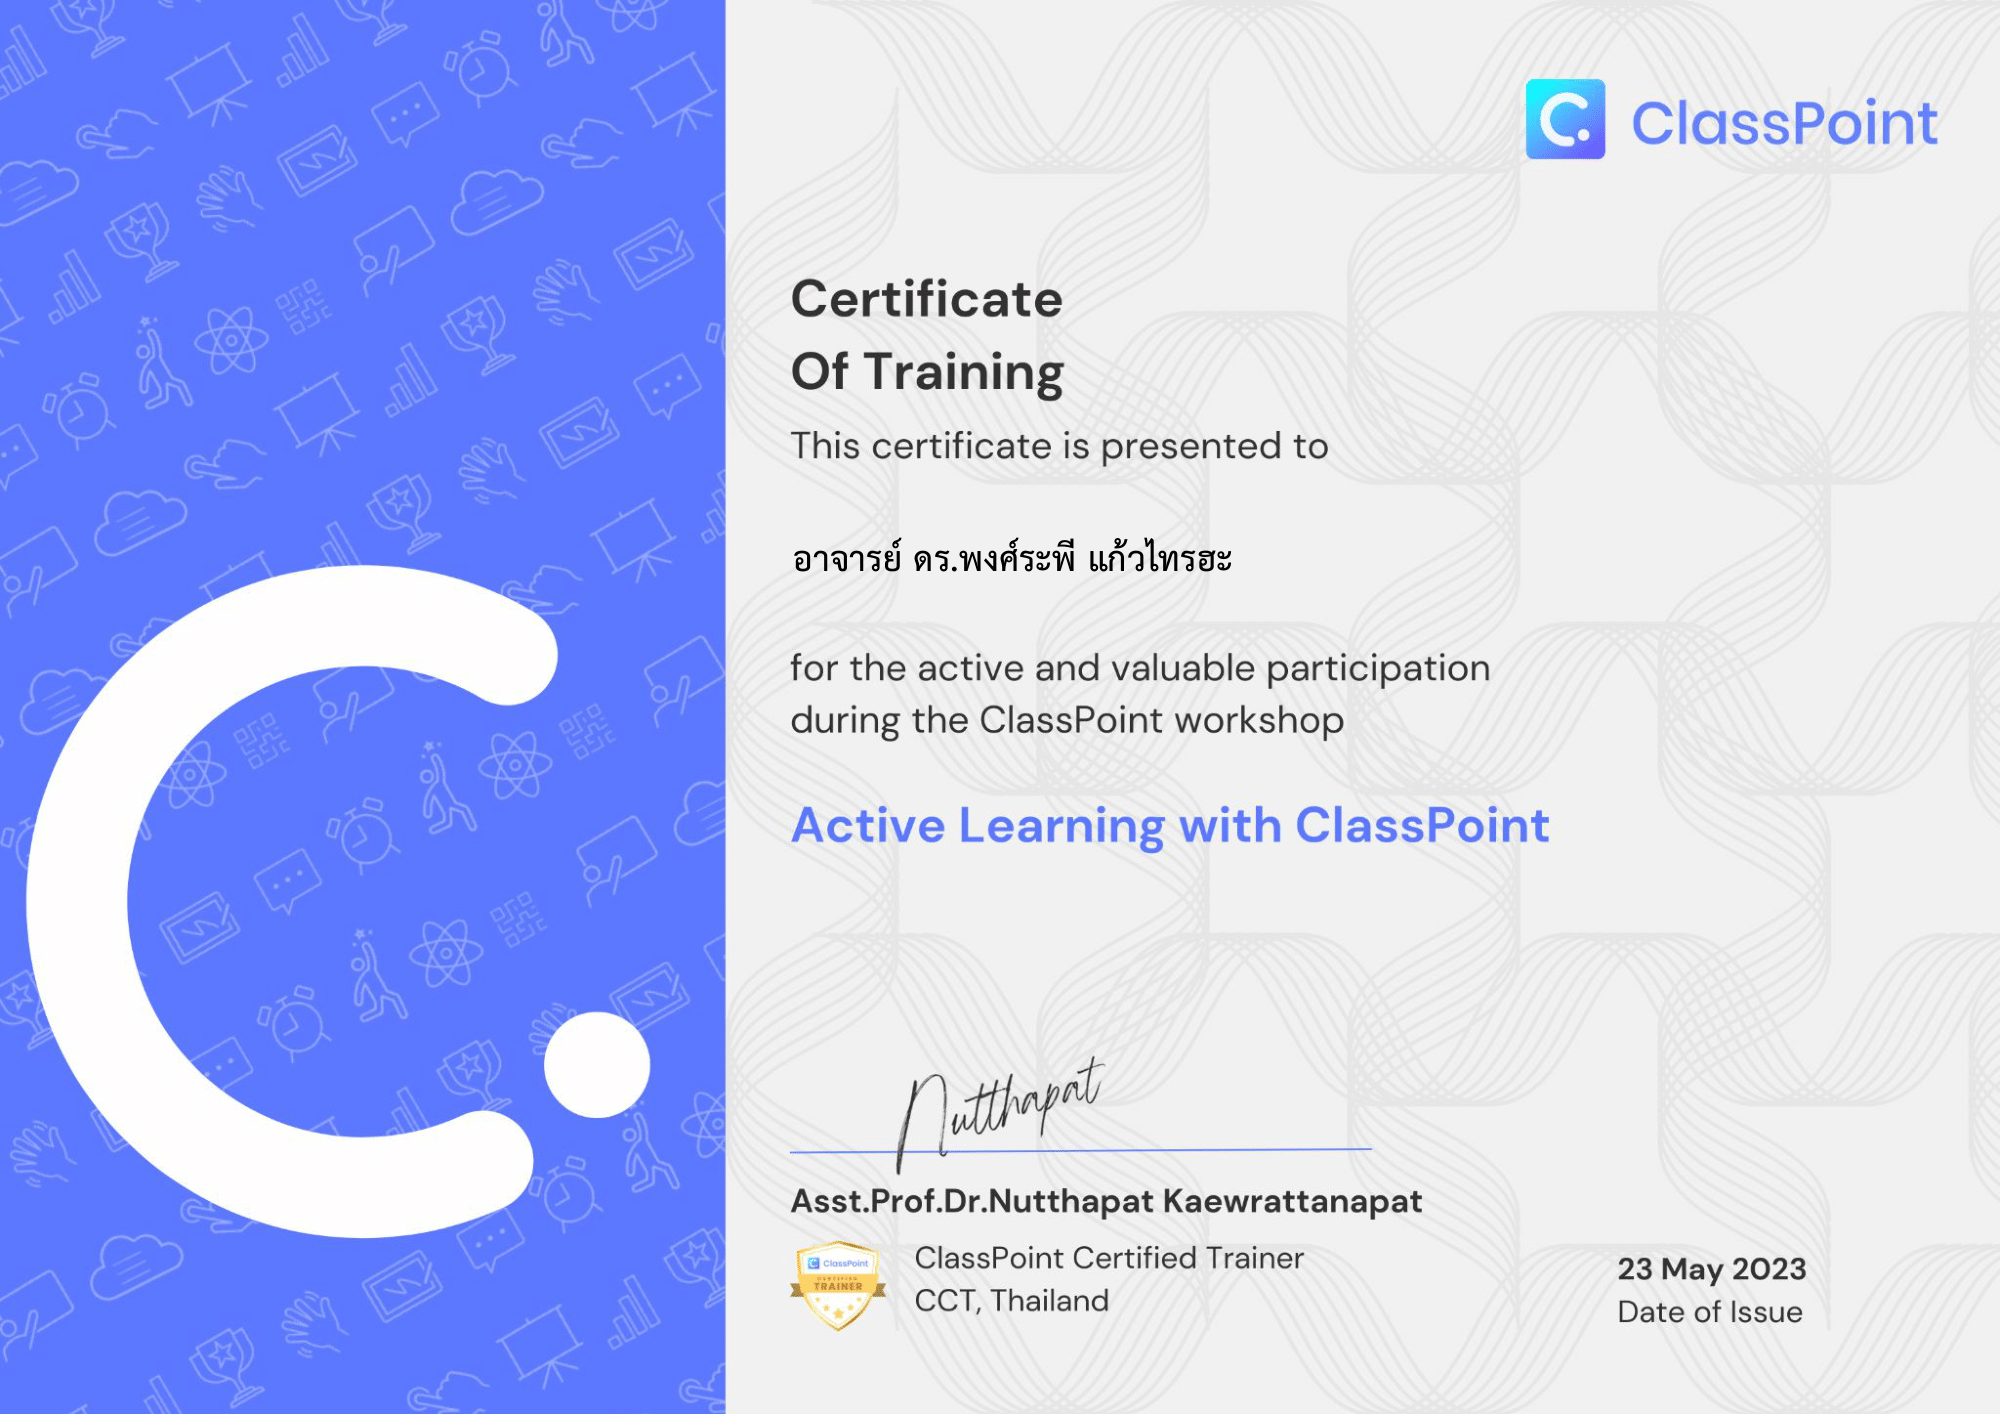 ClassPoint Certificate